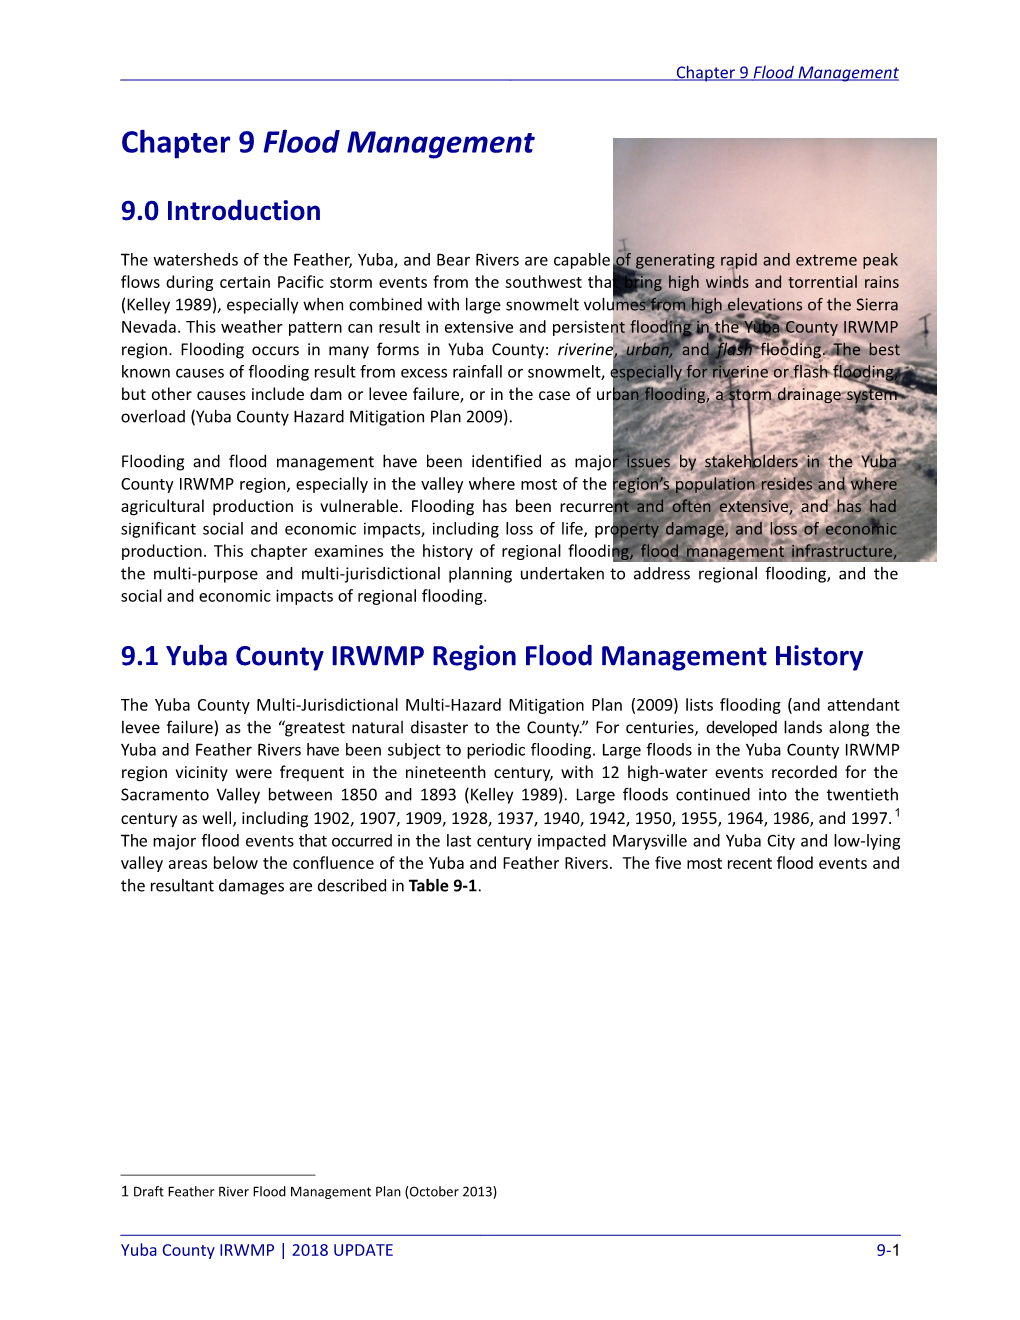 9.1 Yuba County IRWMP Region Flood Management History